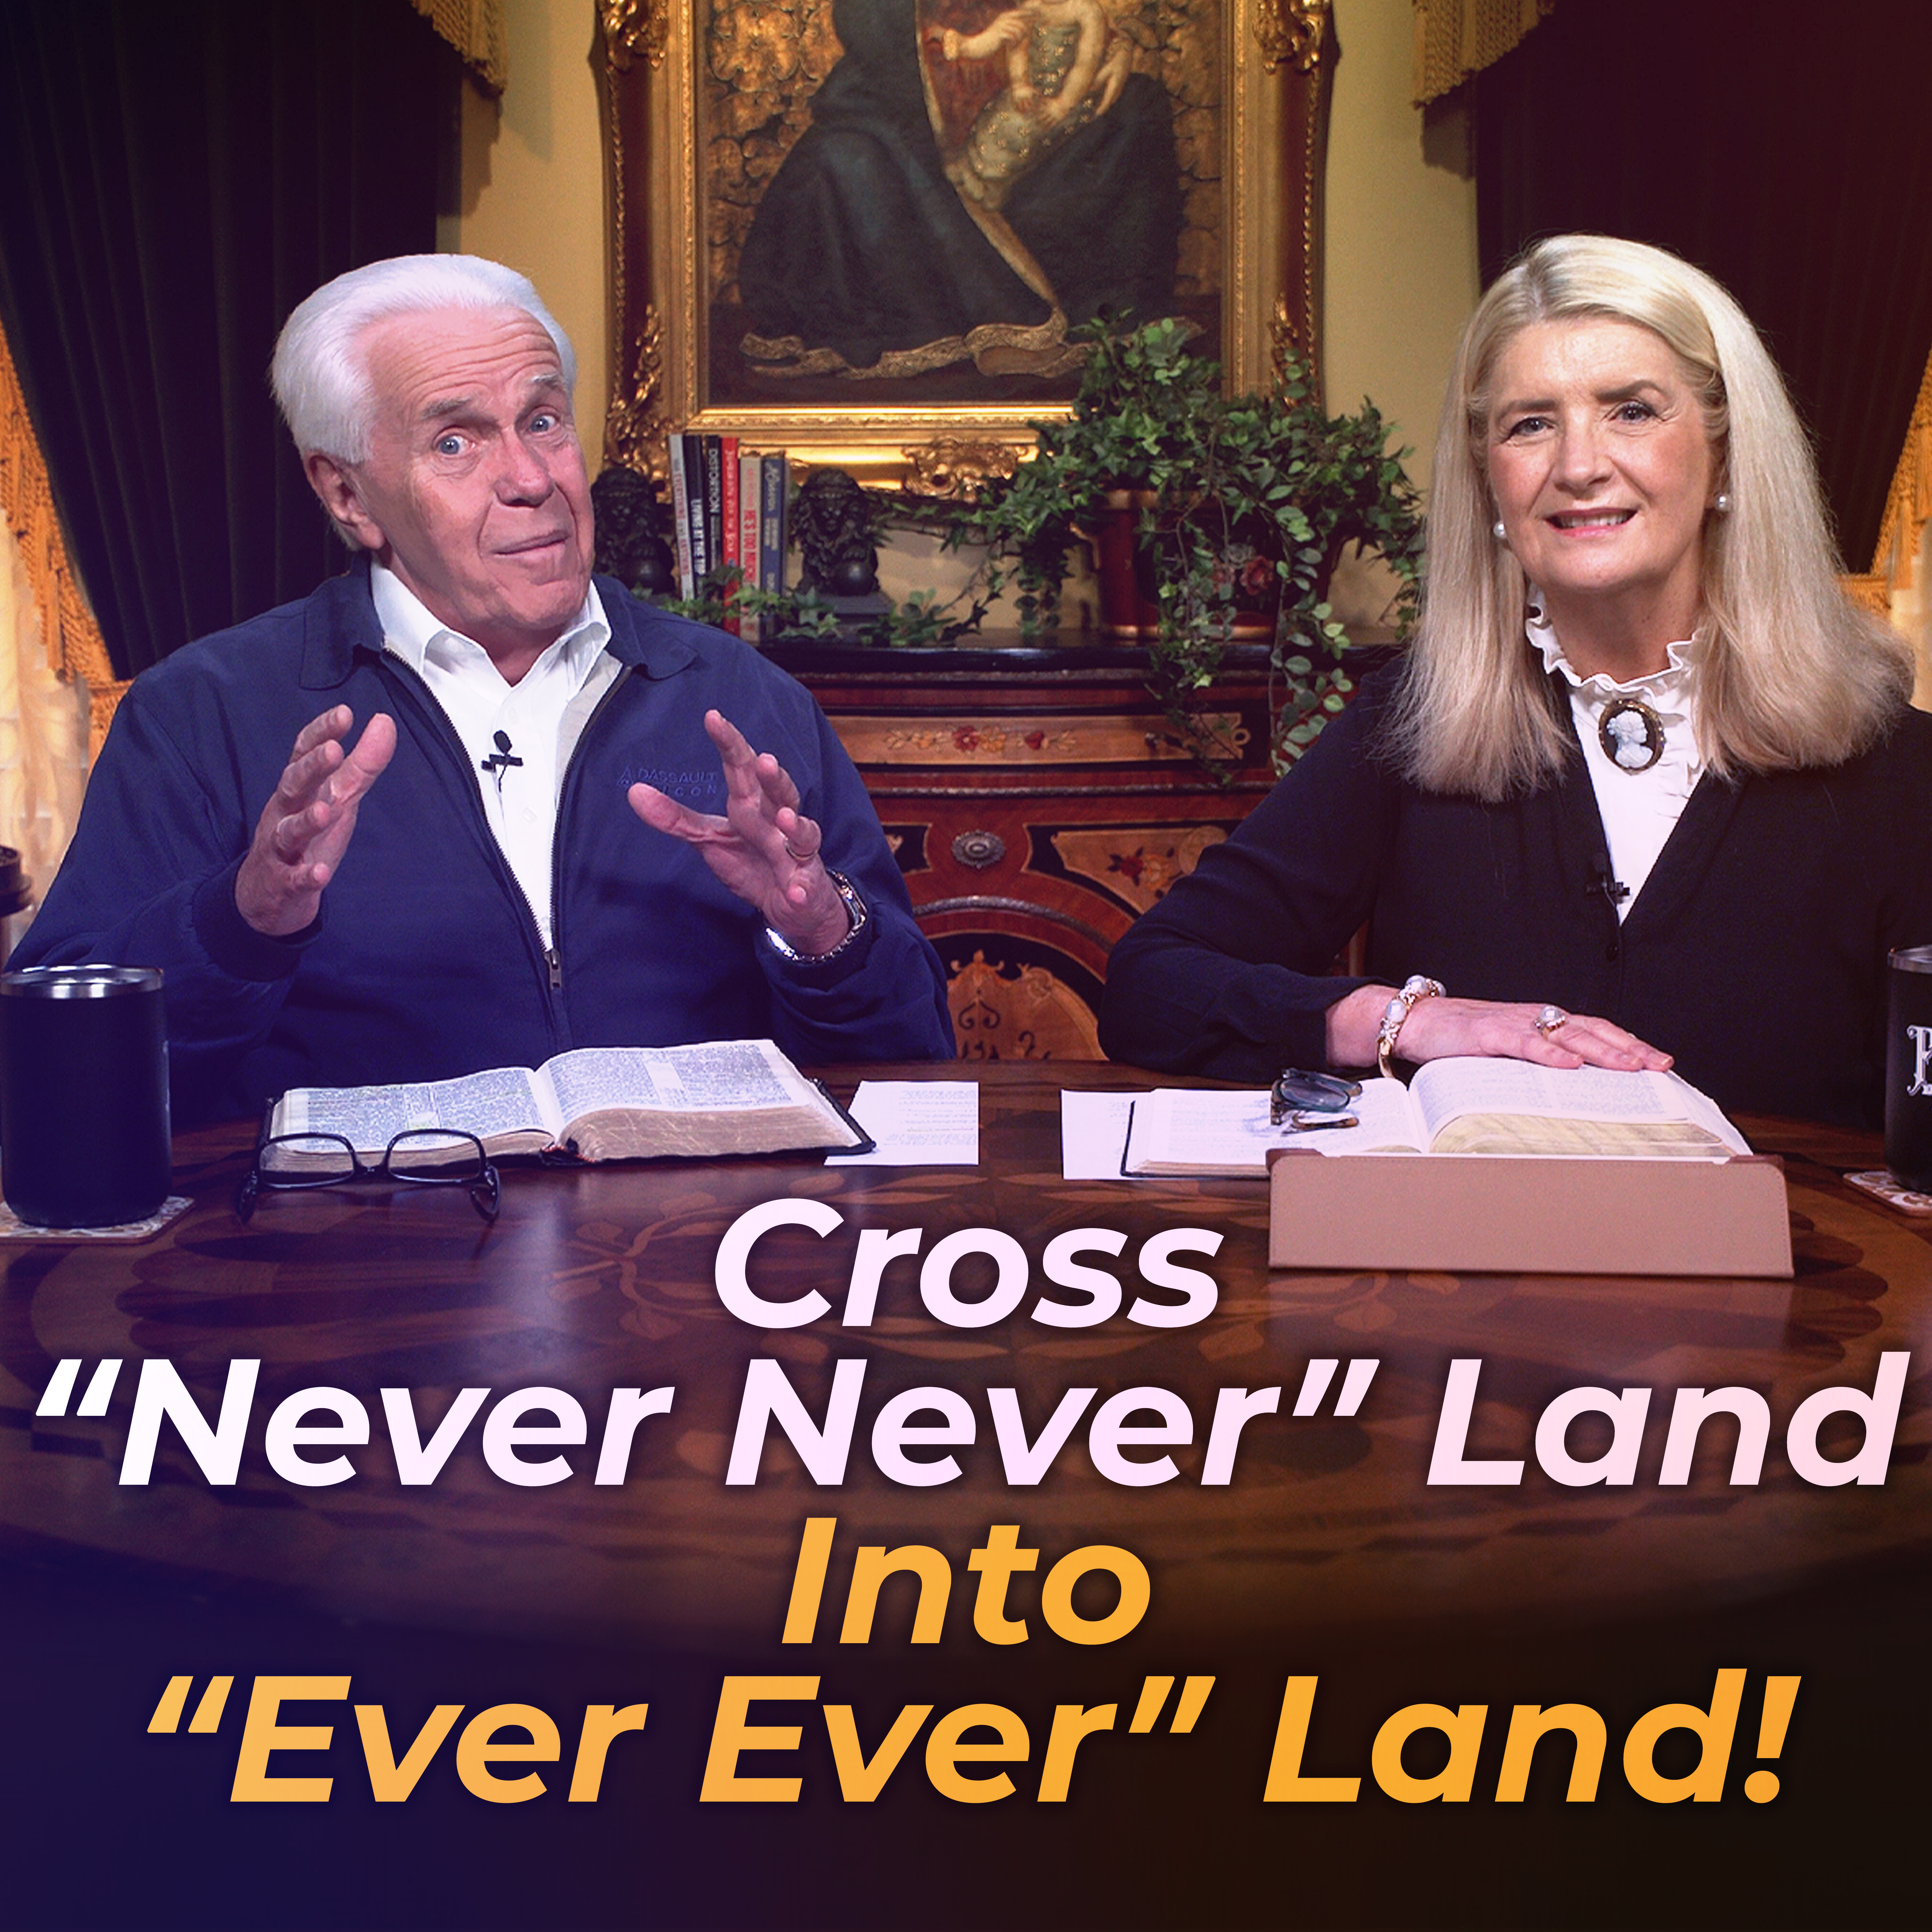 Cross “Never Never” Land Into “Ever Ever” Land!